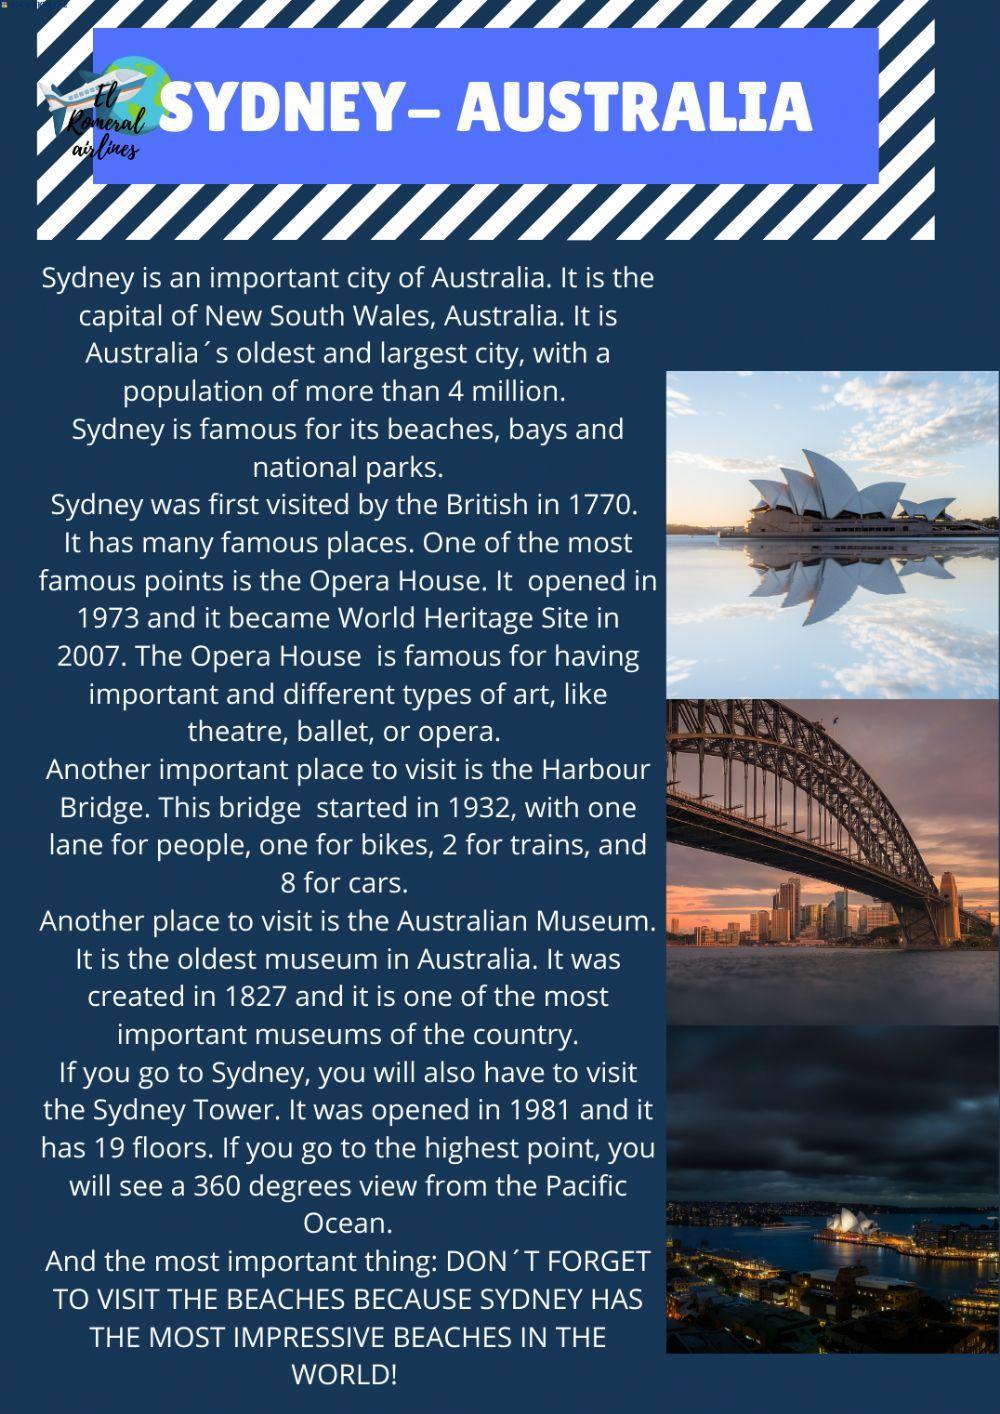 Sydney-Australia timeline